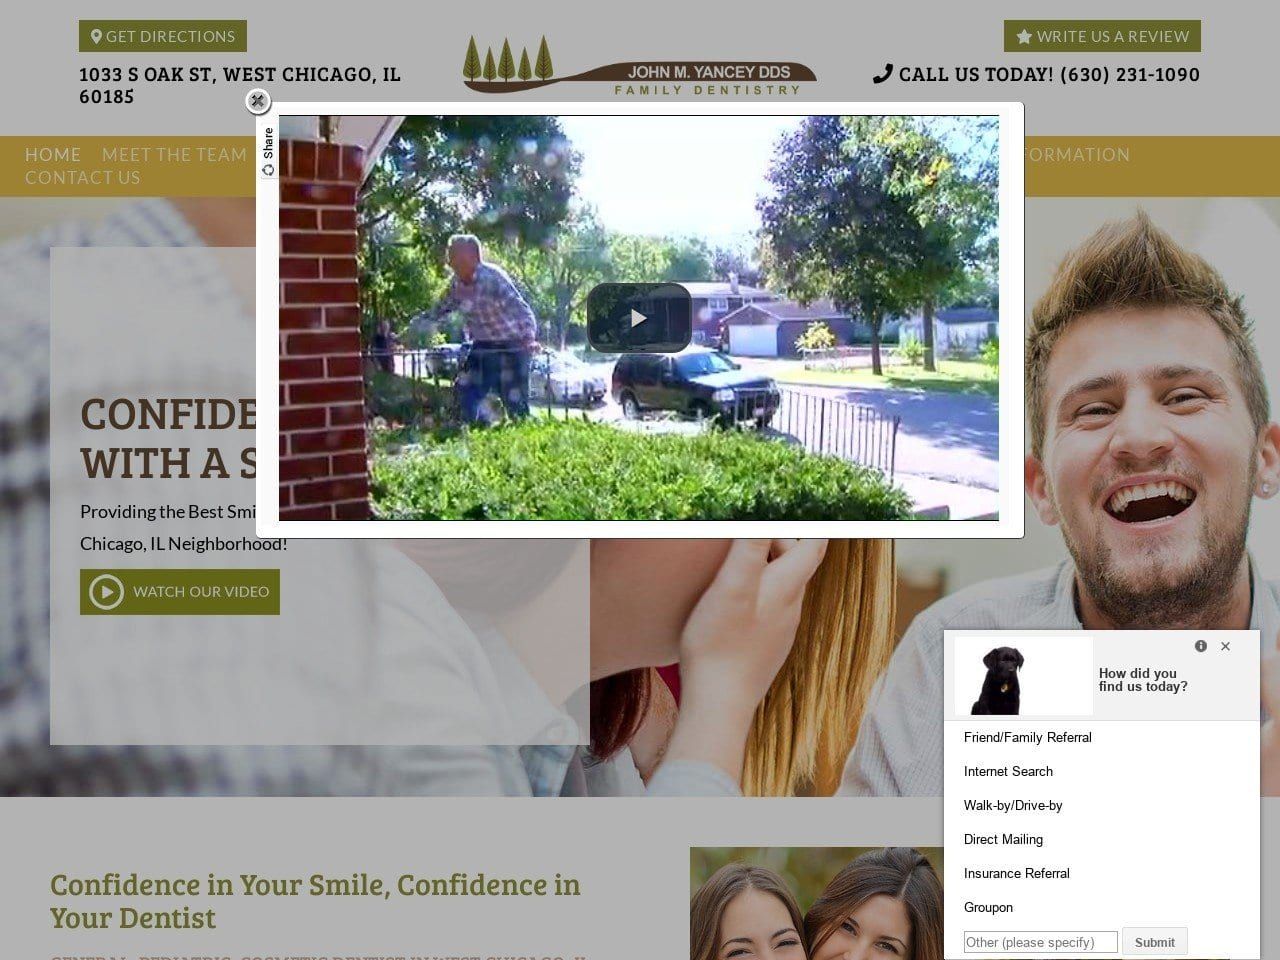 John M Yancey Dds Family Dentist Website Screenshot from johnmyanceydds.com